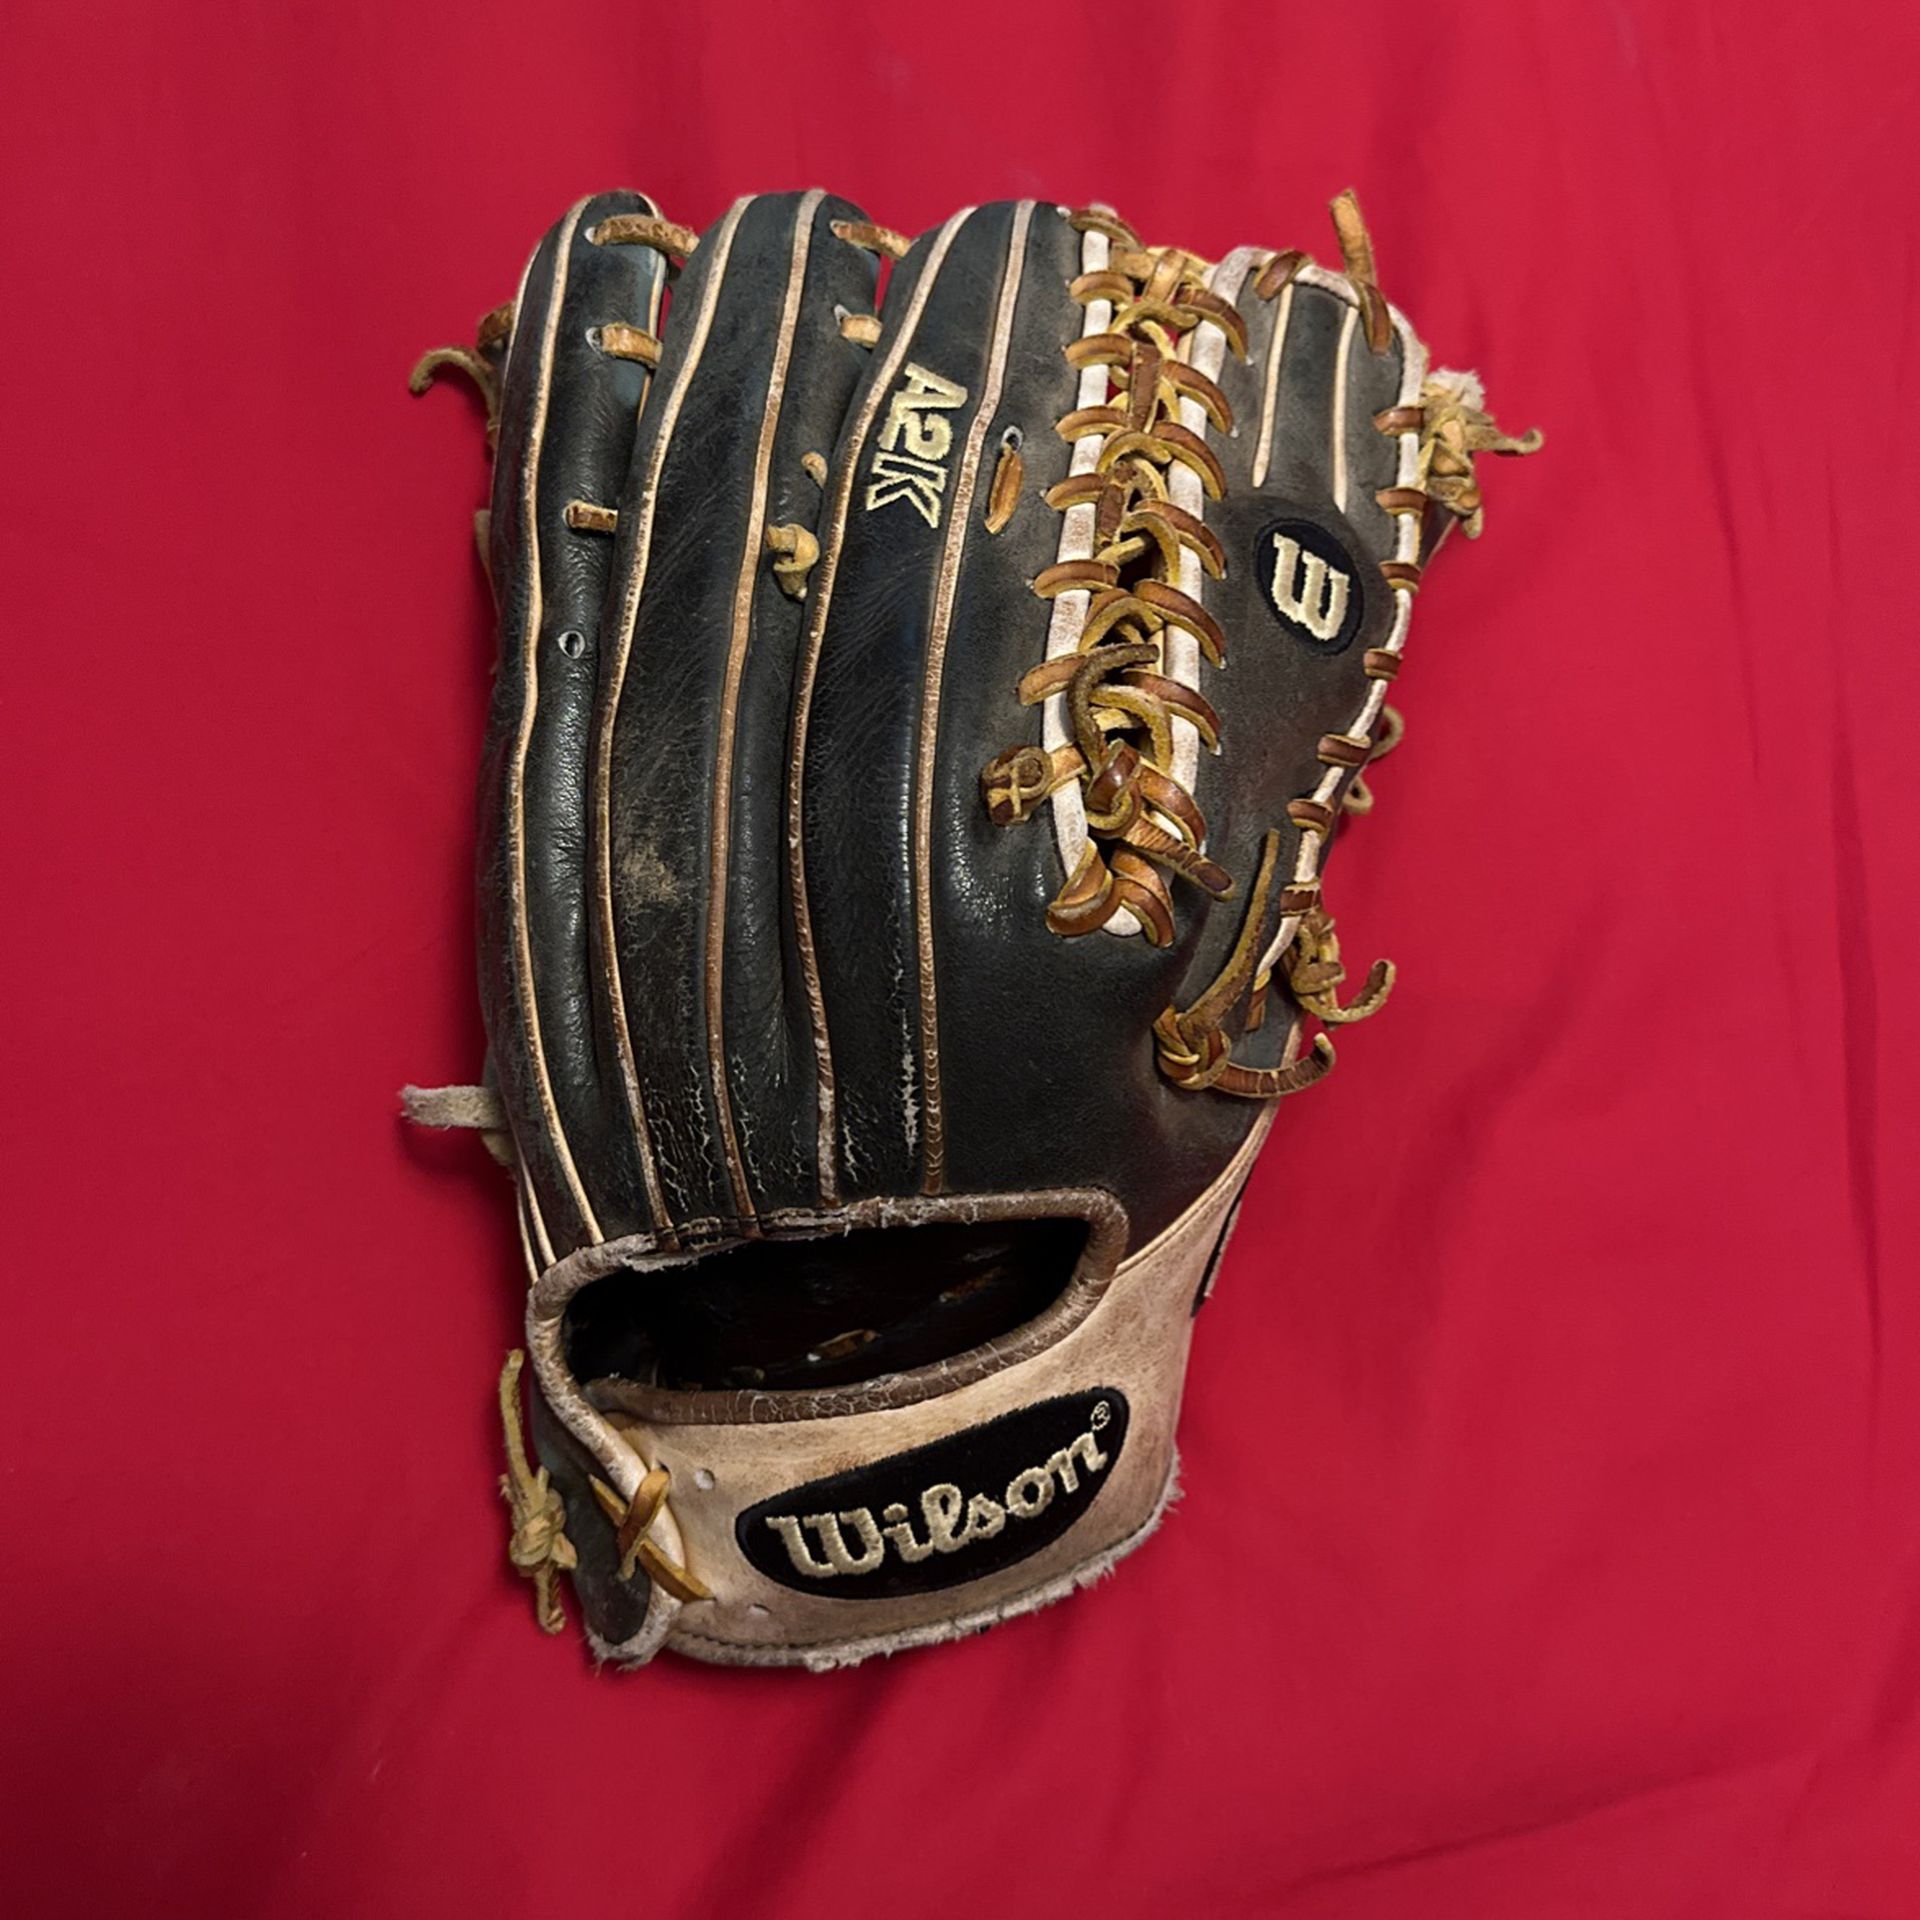 A2K Outfield baseball glove